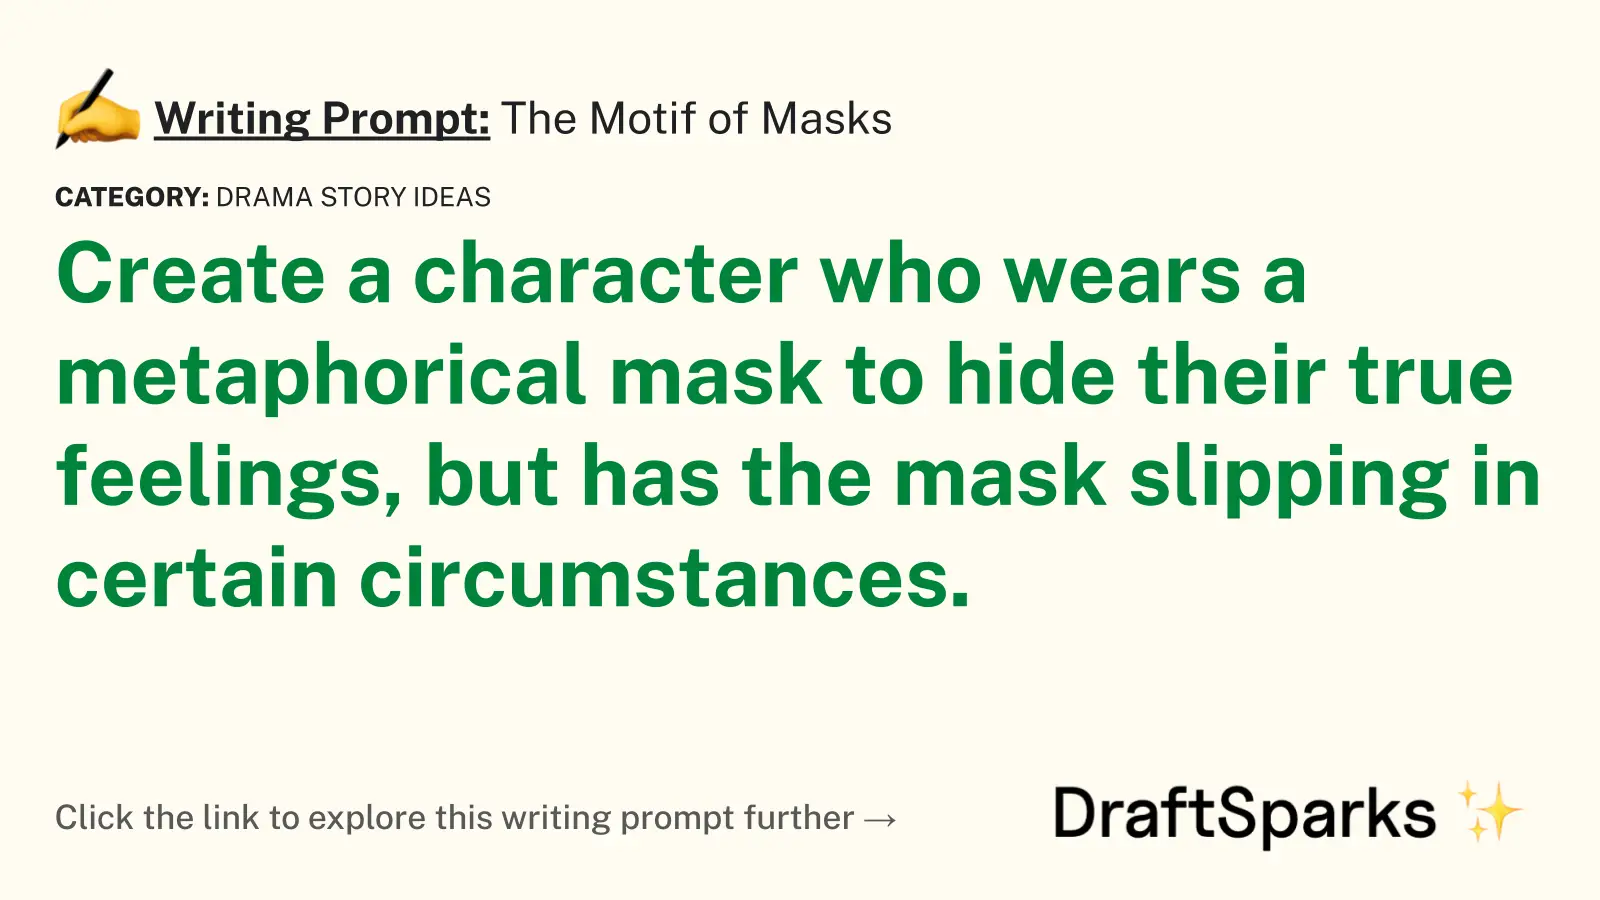 The Motif of Masks